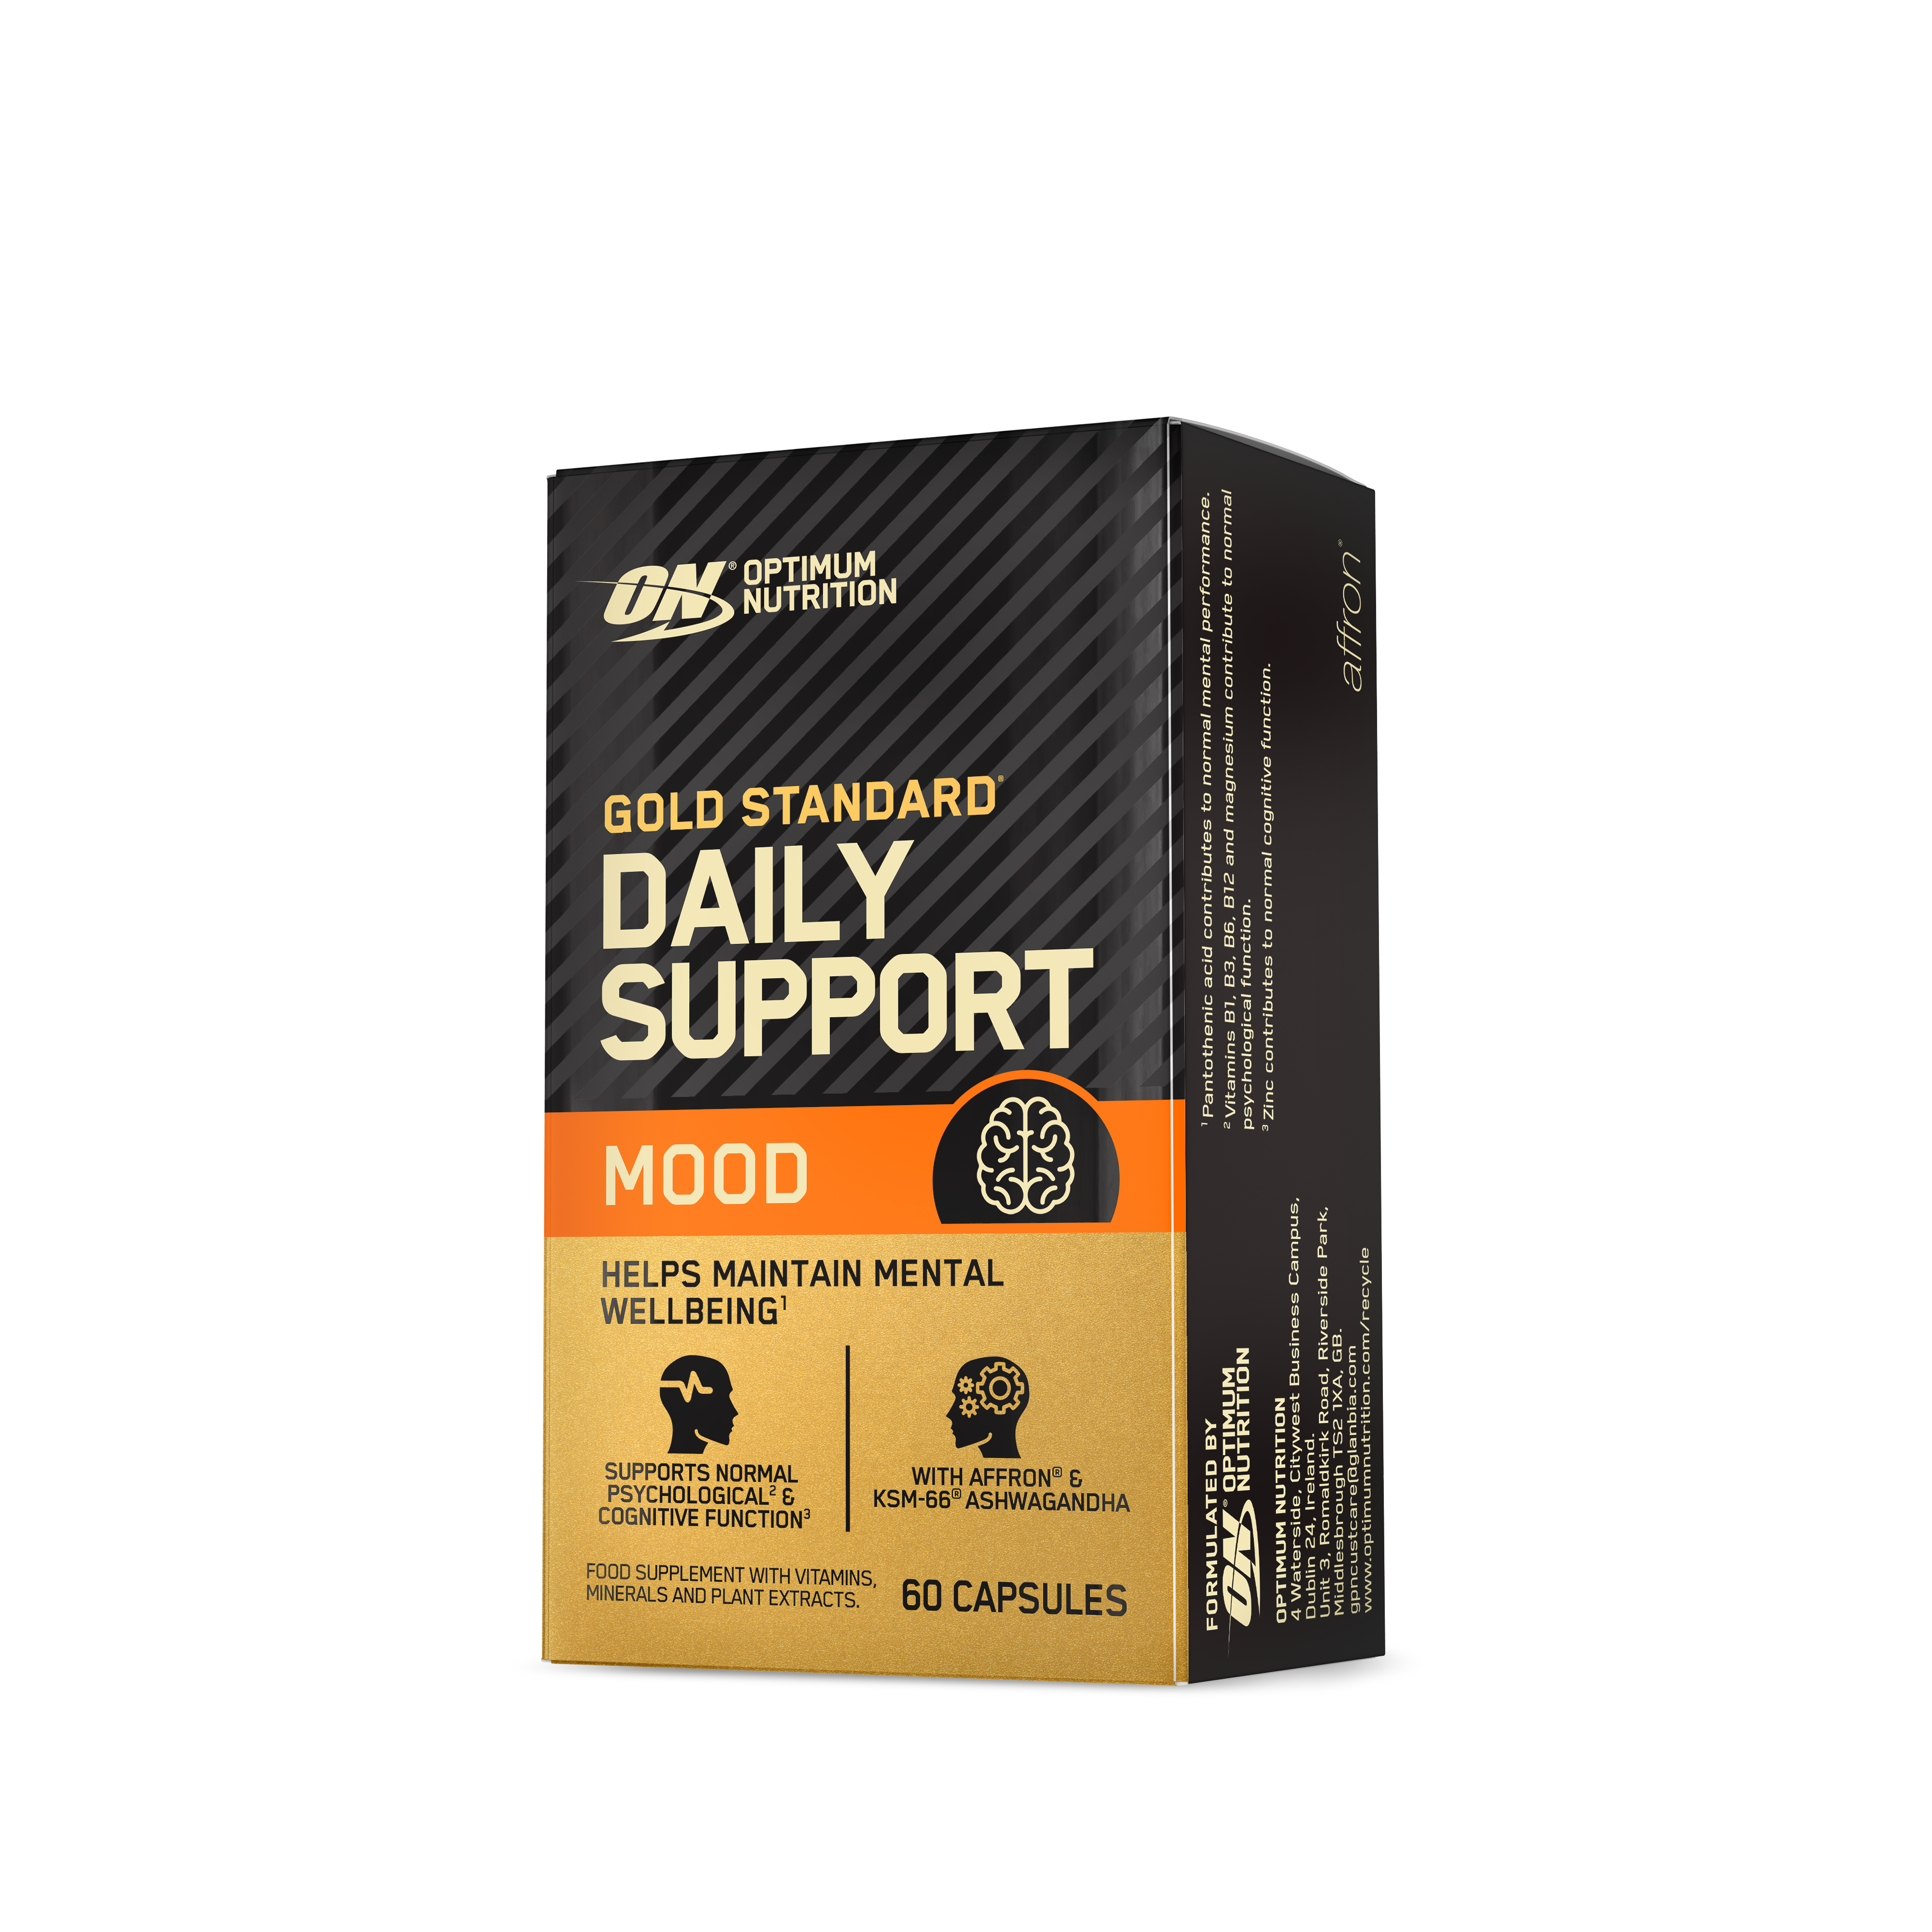 Optimum Nutrition UK Optimum Nutrition Gold Standard Daily Support Mood 60 Capsules (36 g)